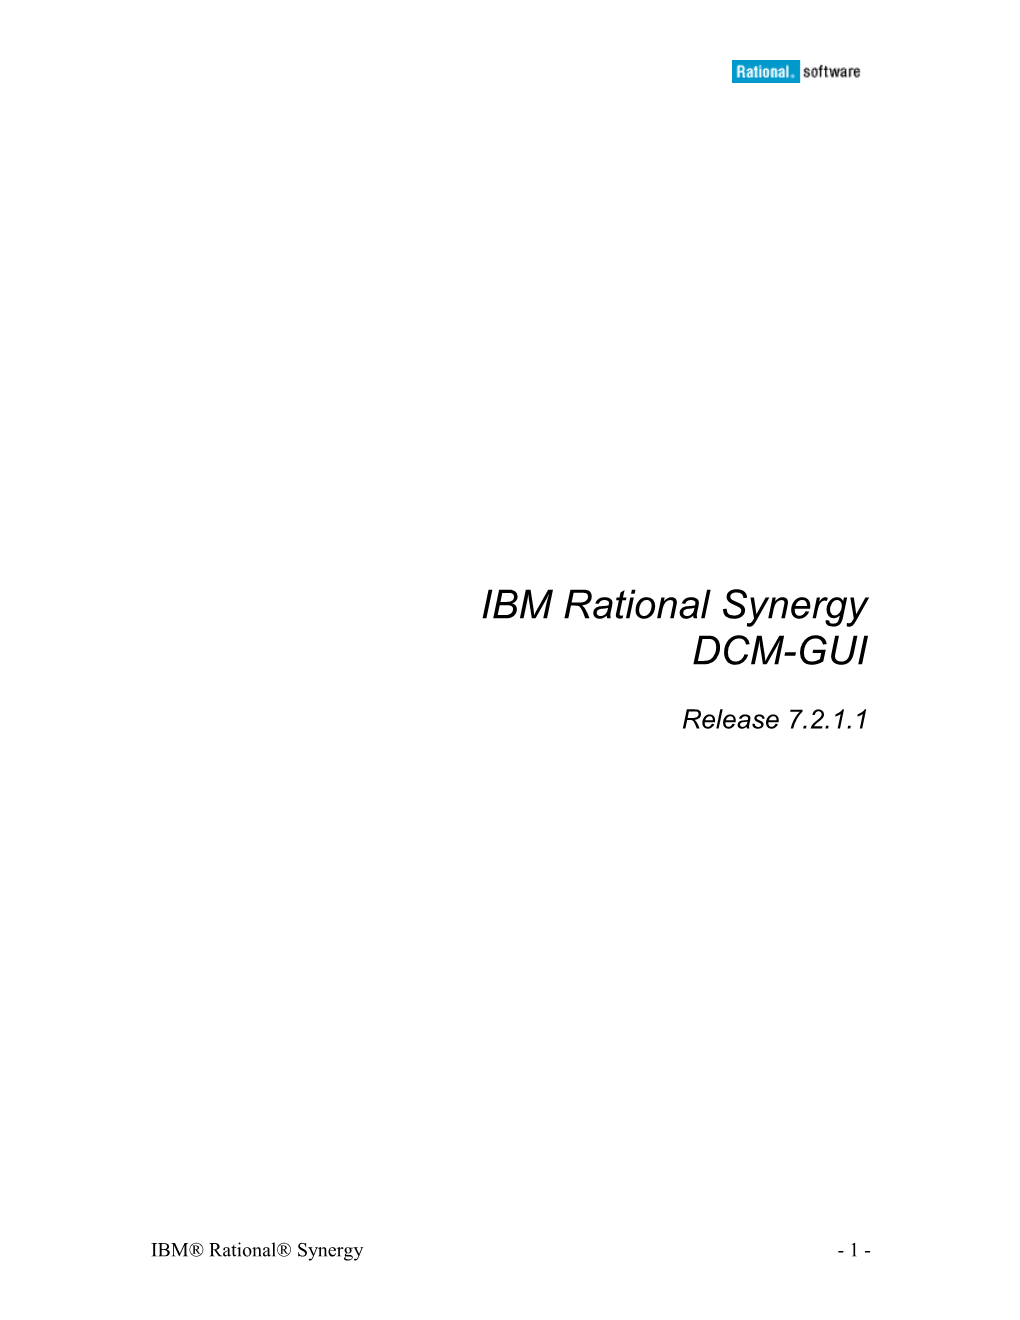 IBM Rational Synergy DCM-GUI